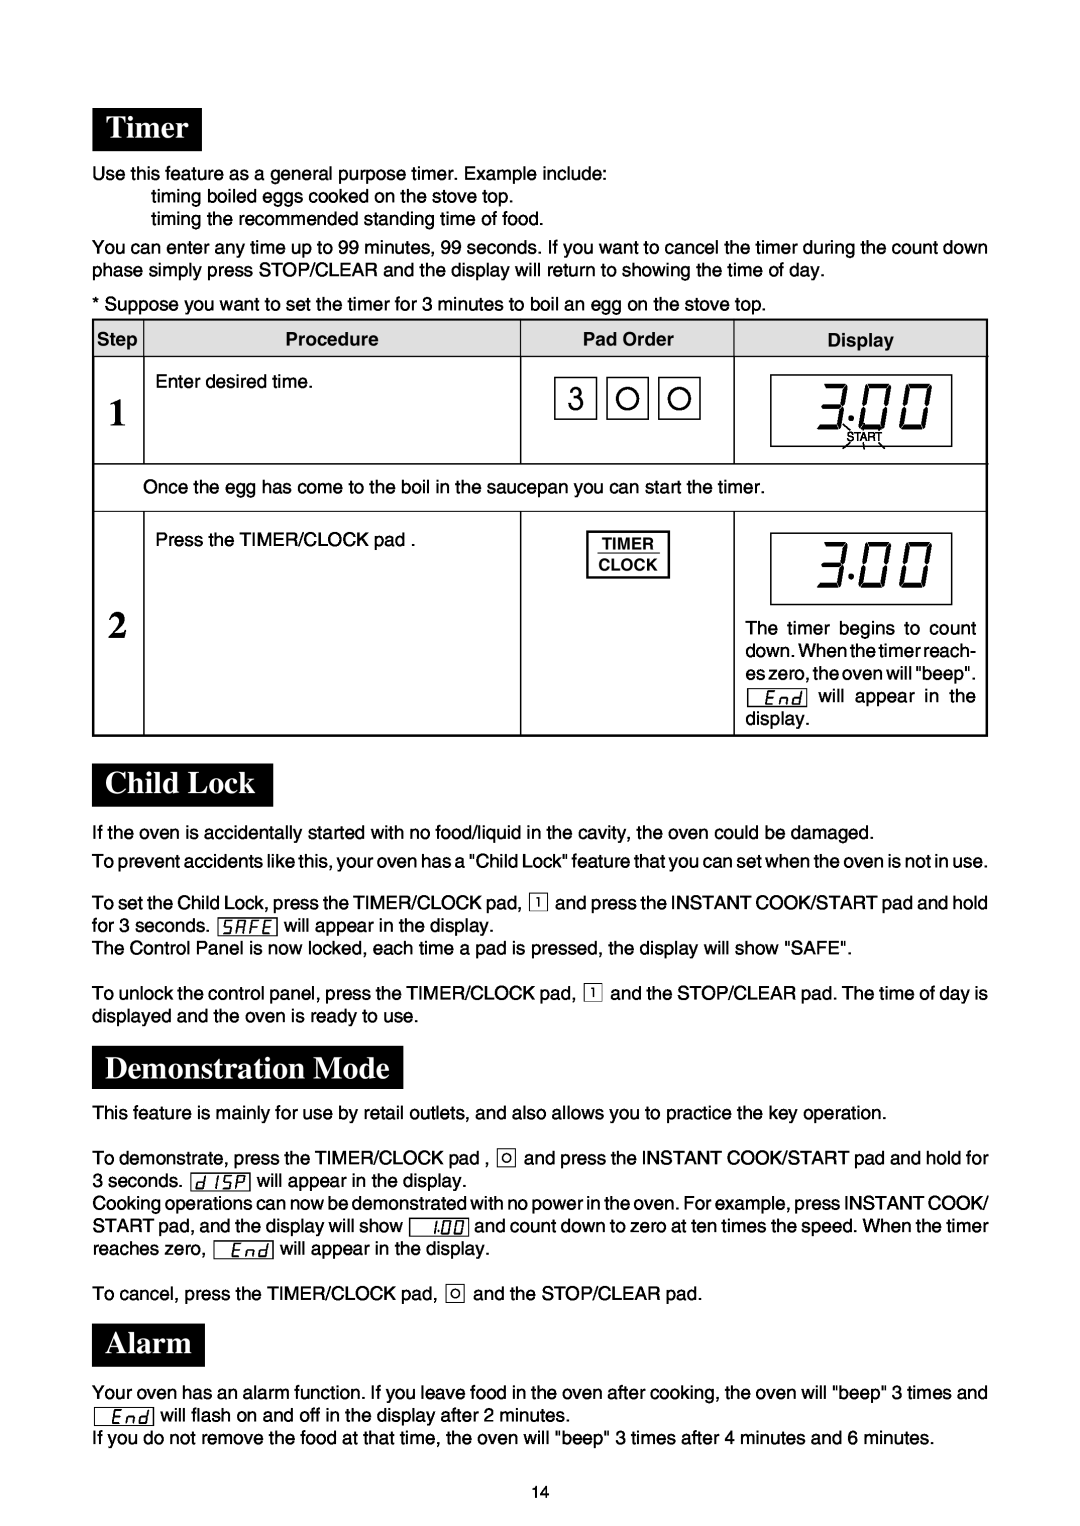 Sharp R-395F(S), R-330F J operation manual Timer, Child Lock, Demonstration Mode, Alarm 